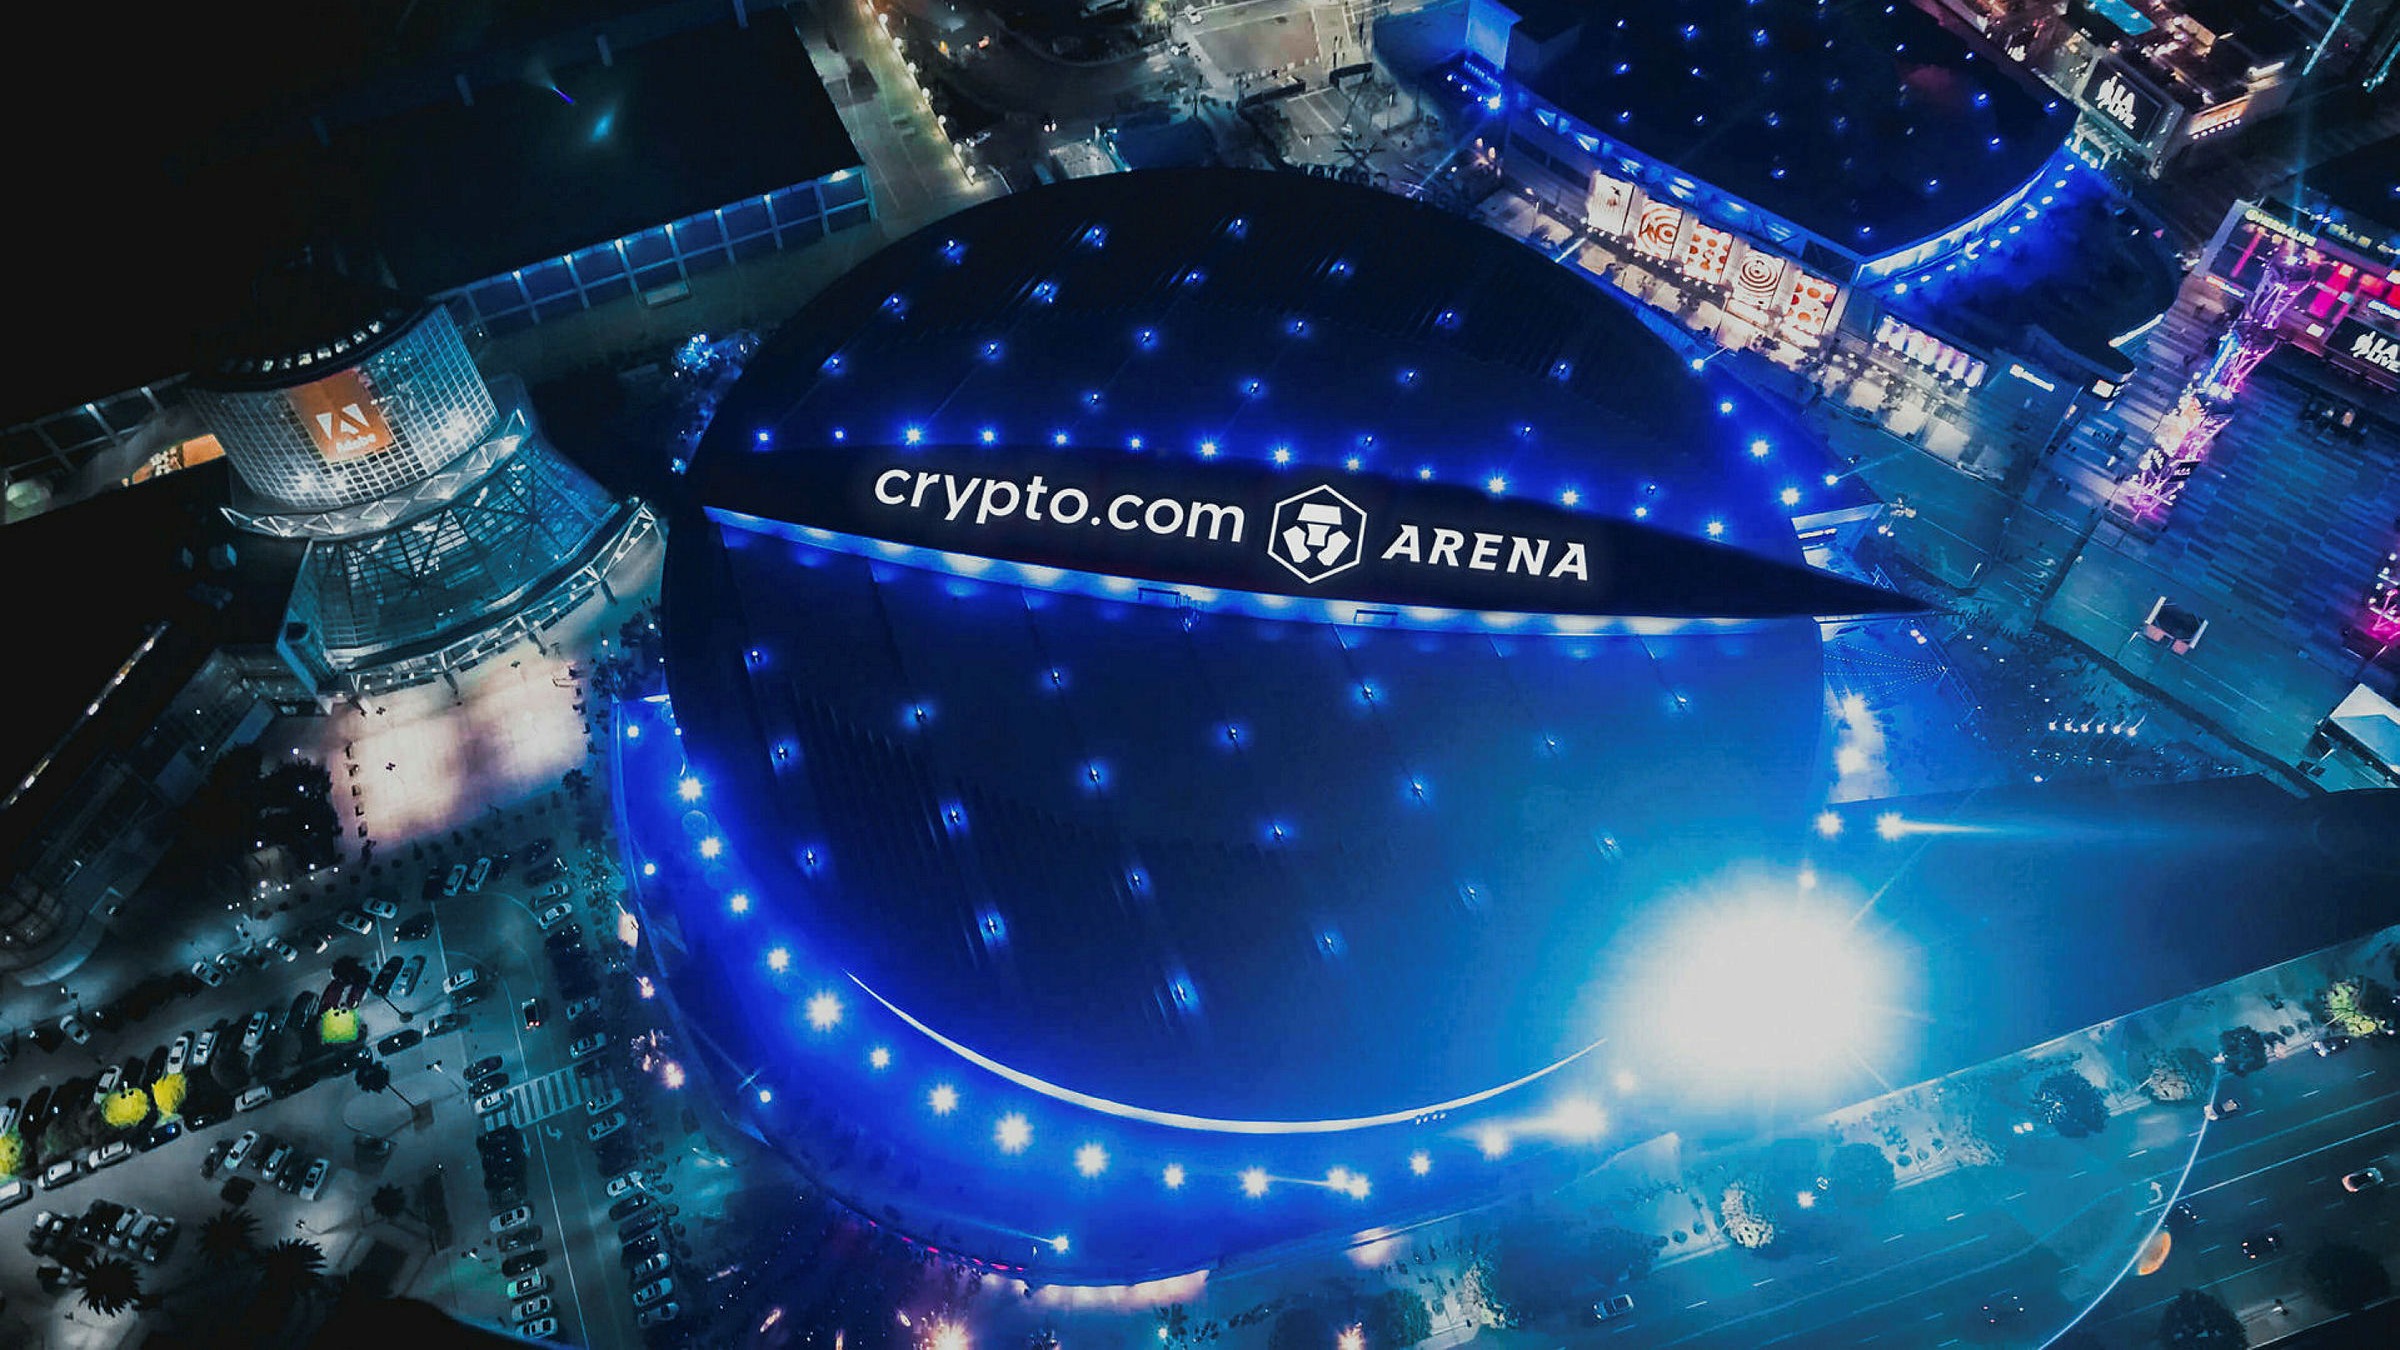 Crypto.com Arena Lakers